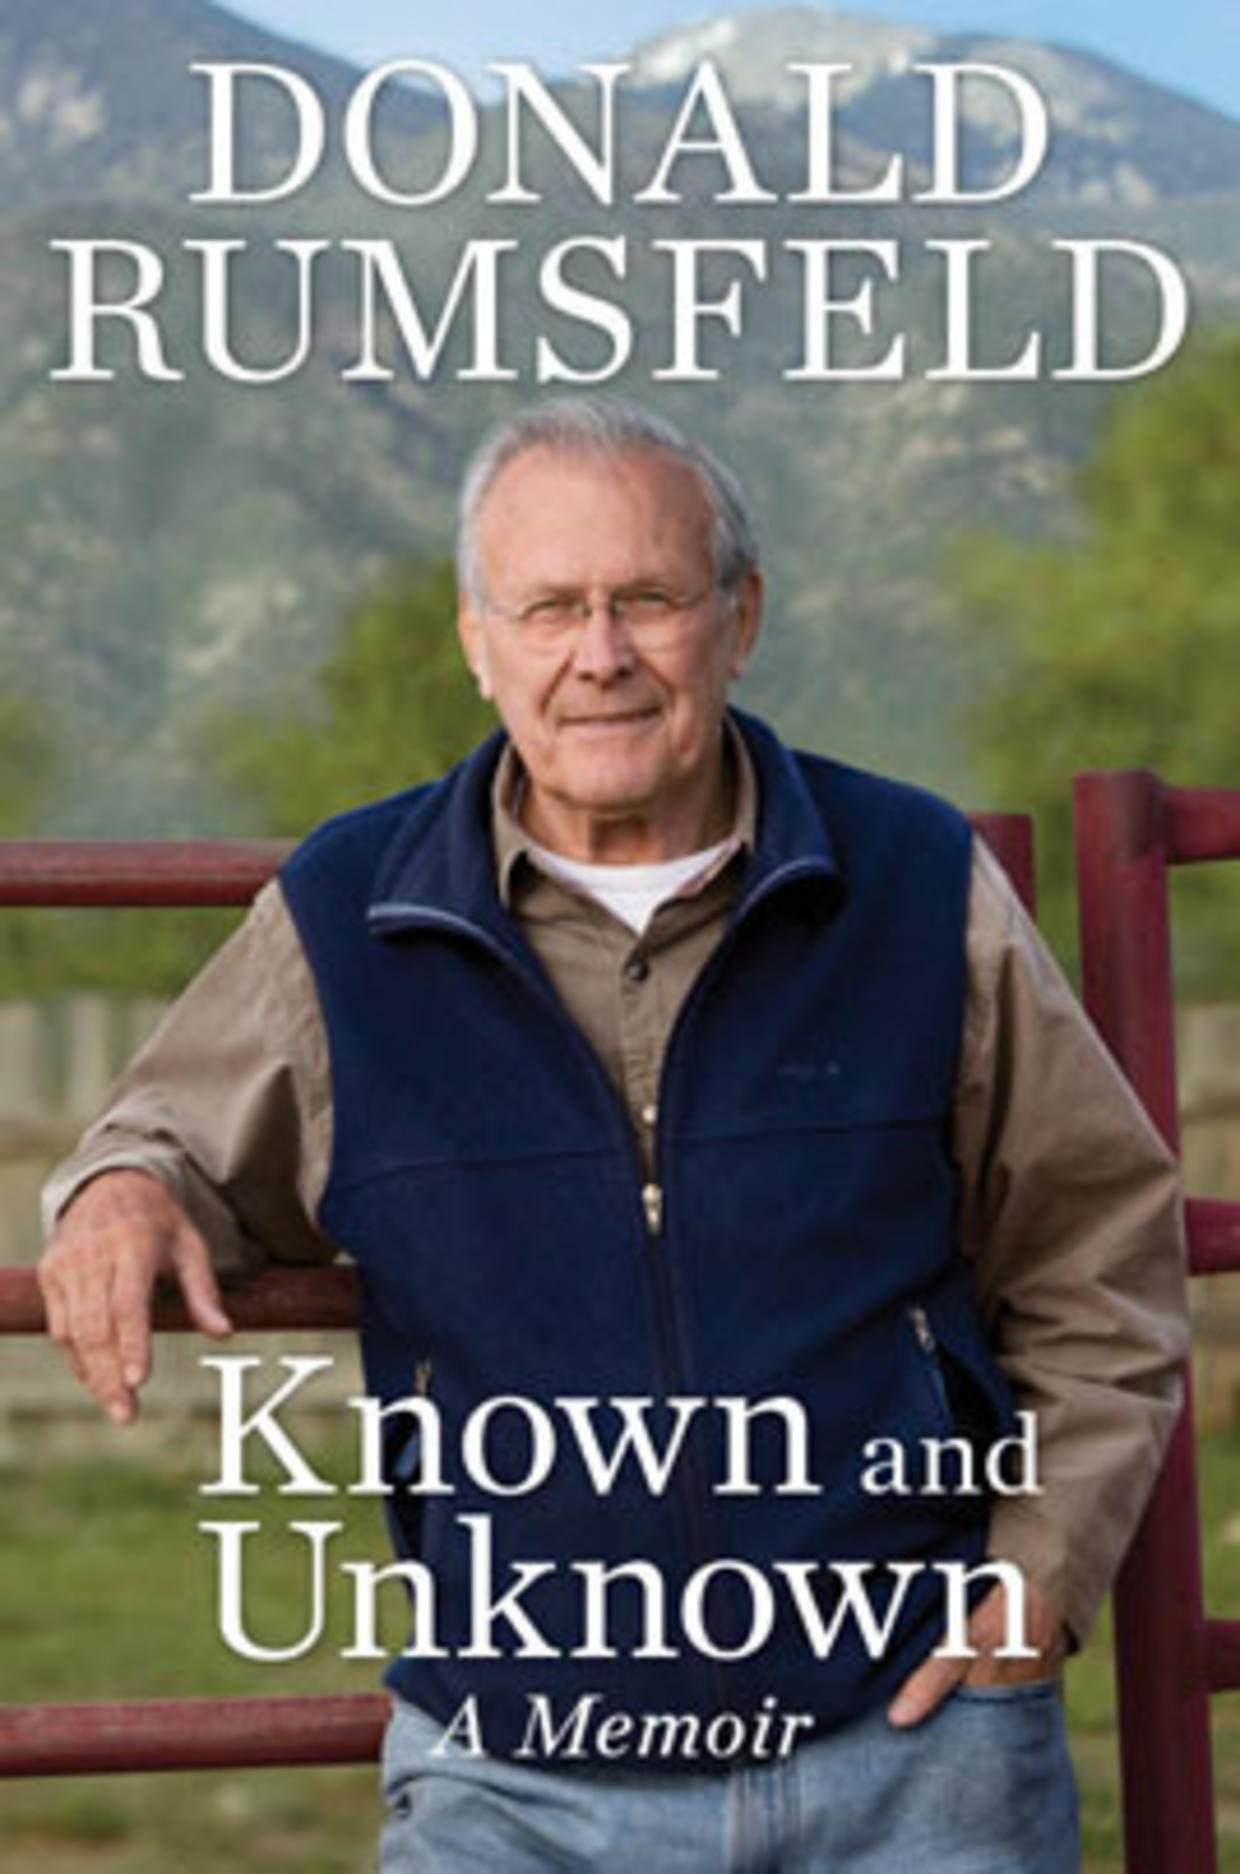 Donald Rumsfeld's Life in Pictures - CBS News